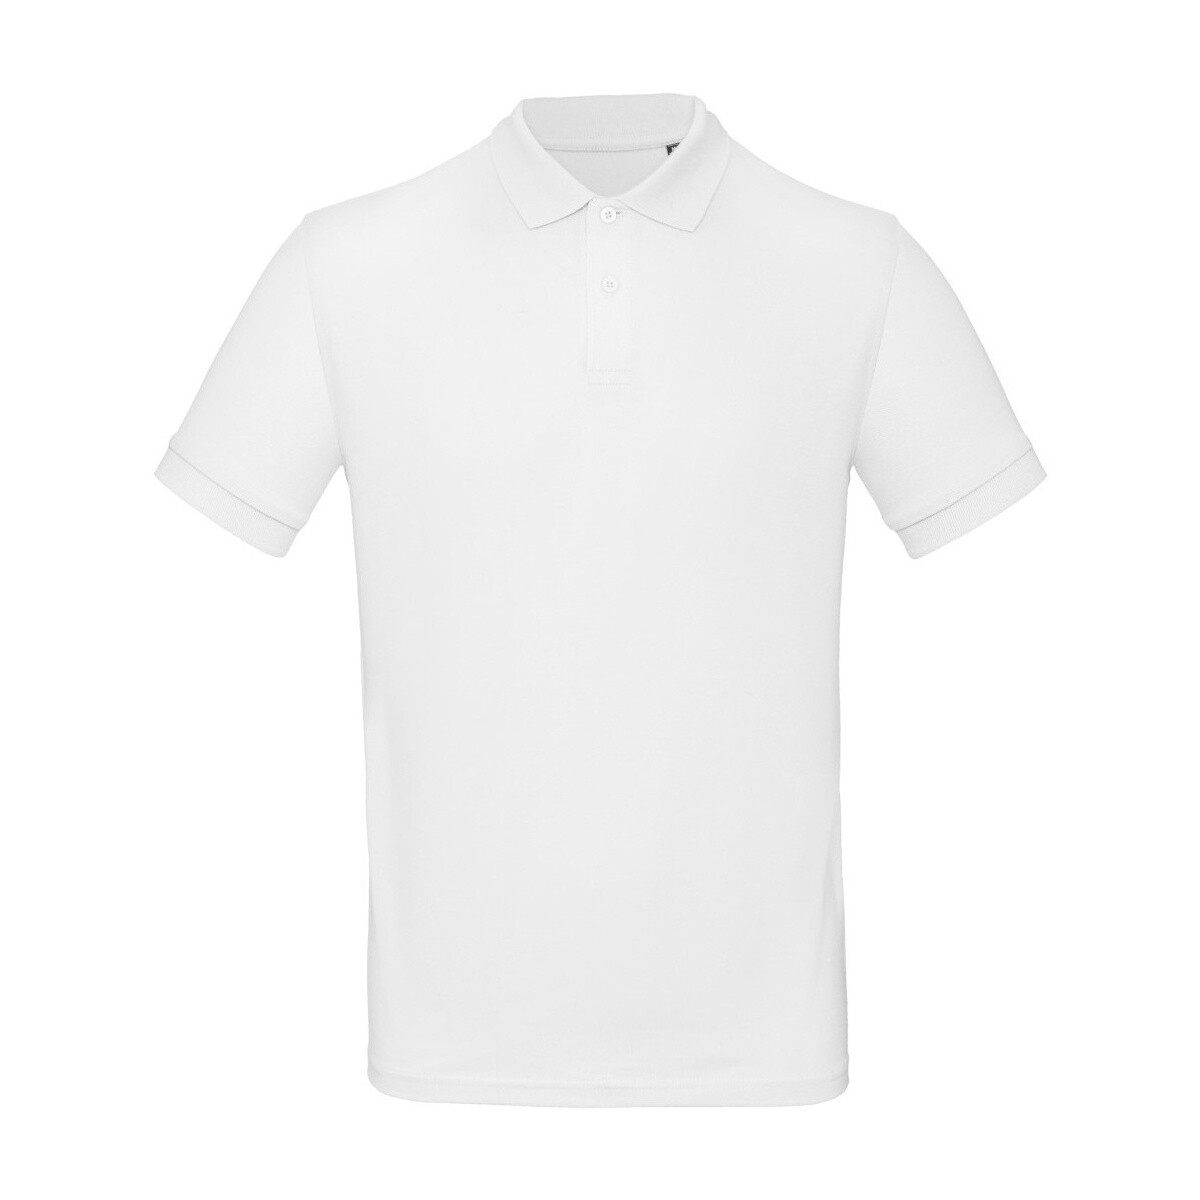 Vêtements Homme Champion OREO All Over Print T-Shirt PM430 Blanc